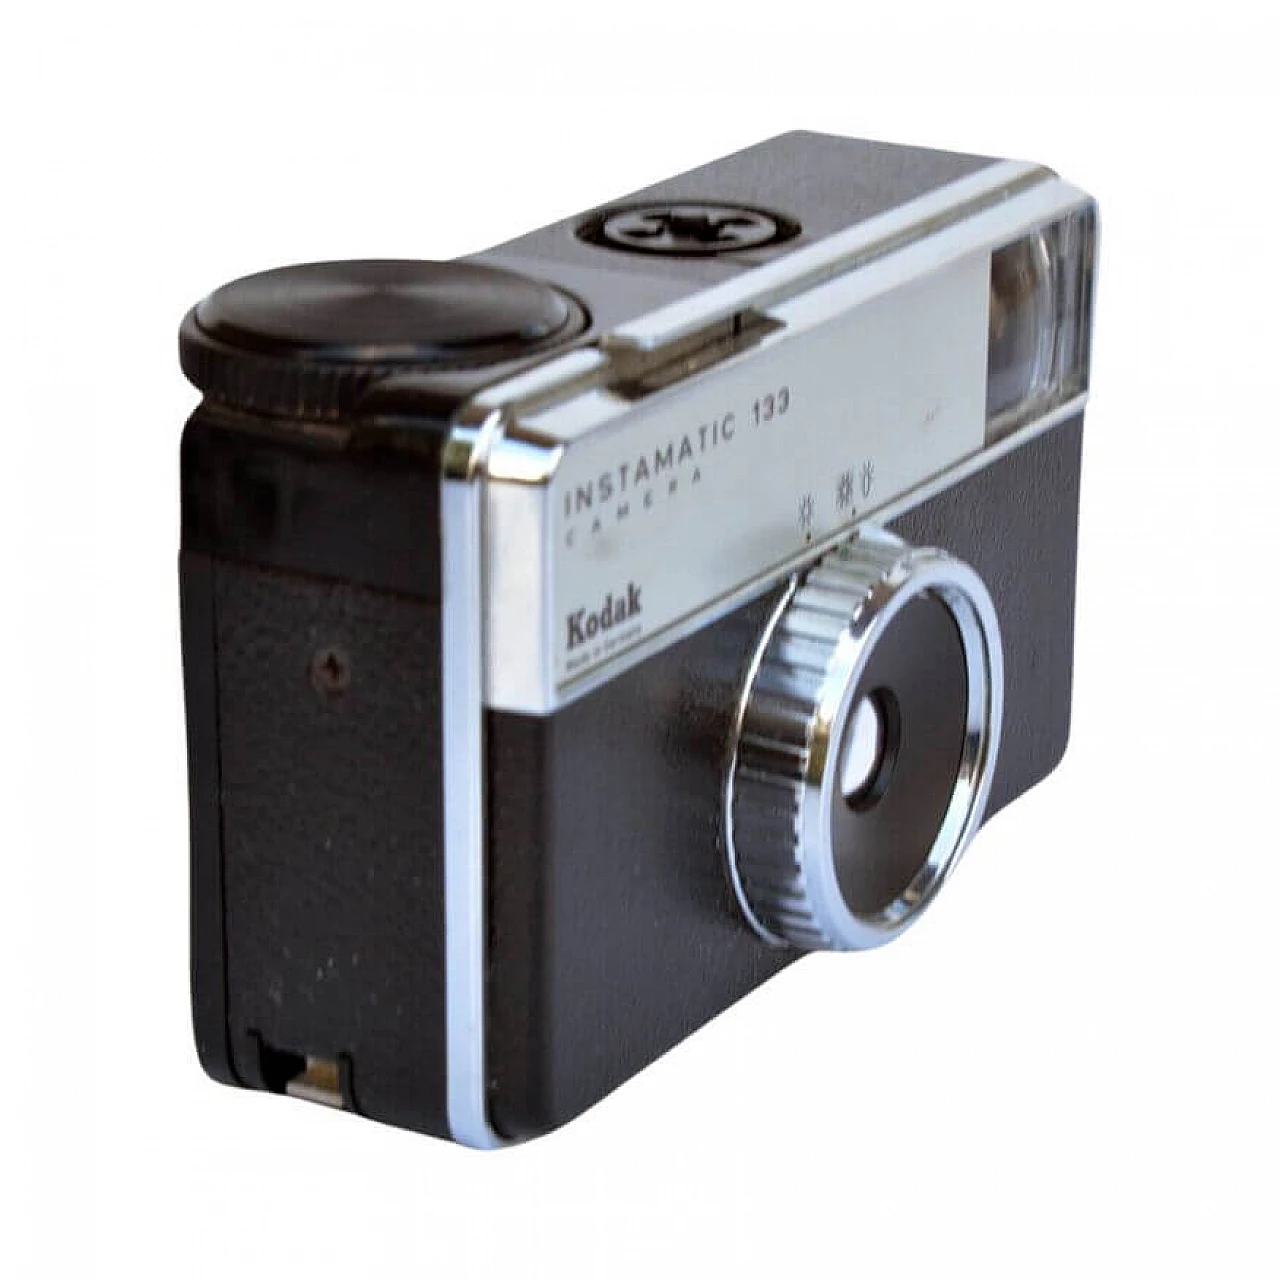 Kodak Instamatic 133 analogue camera, 1970s 5